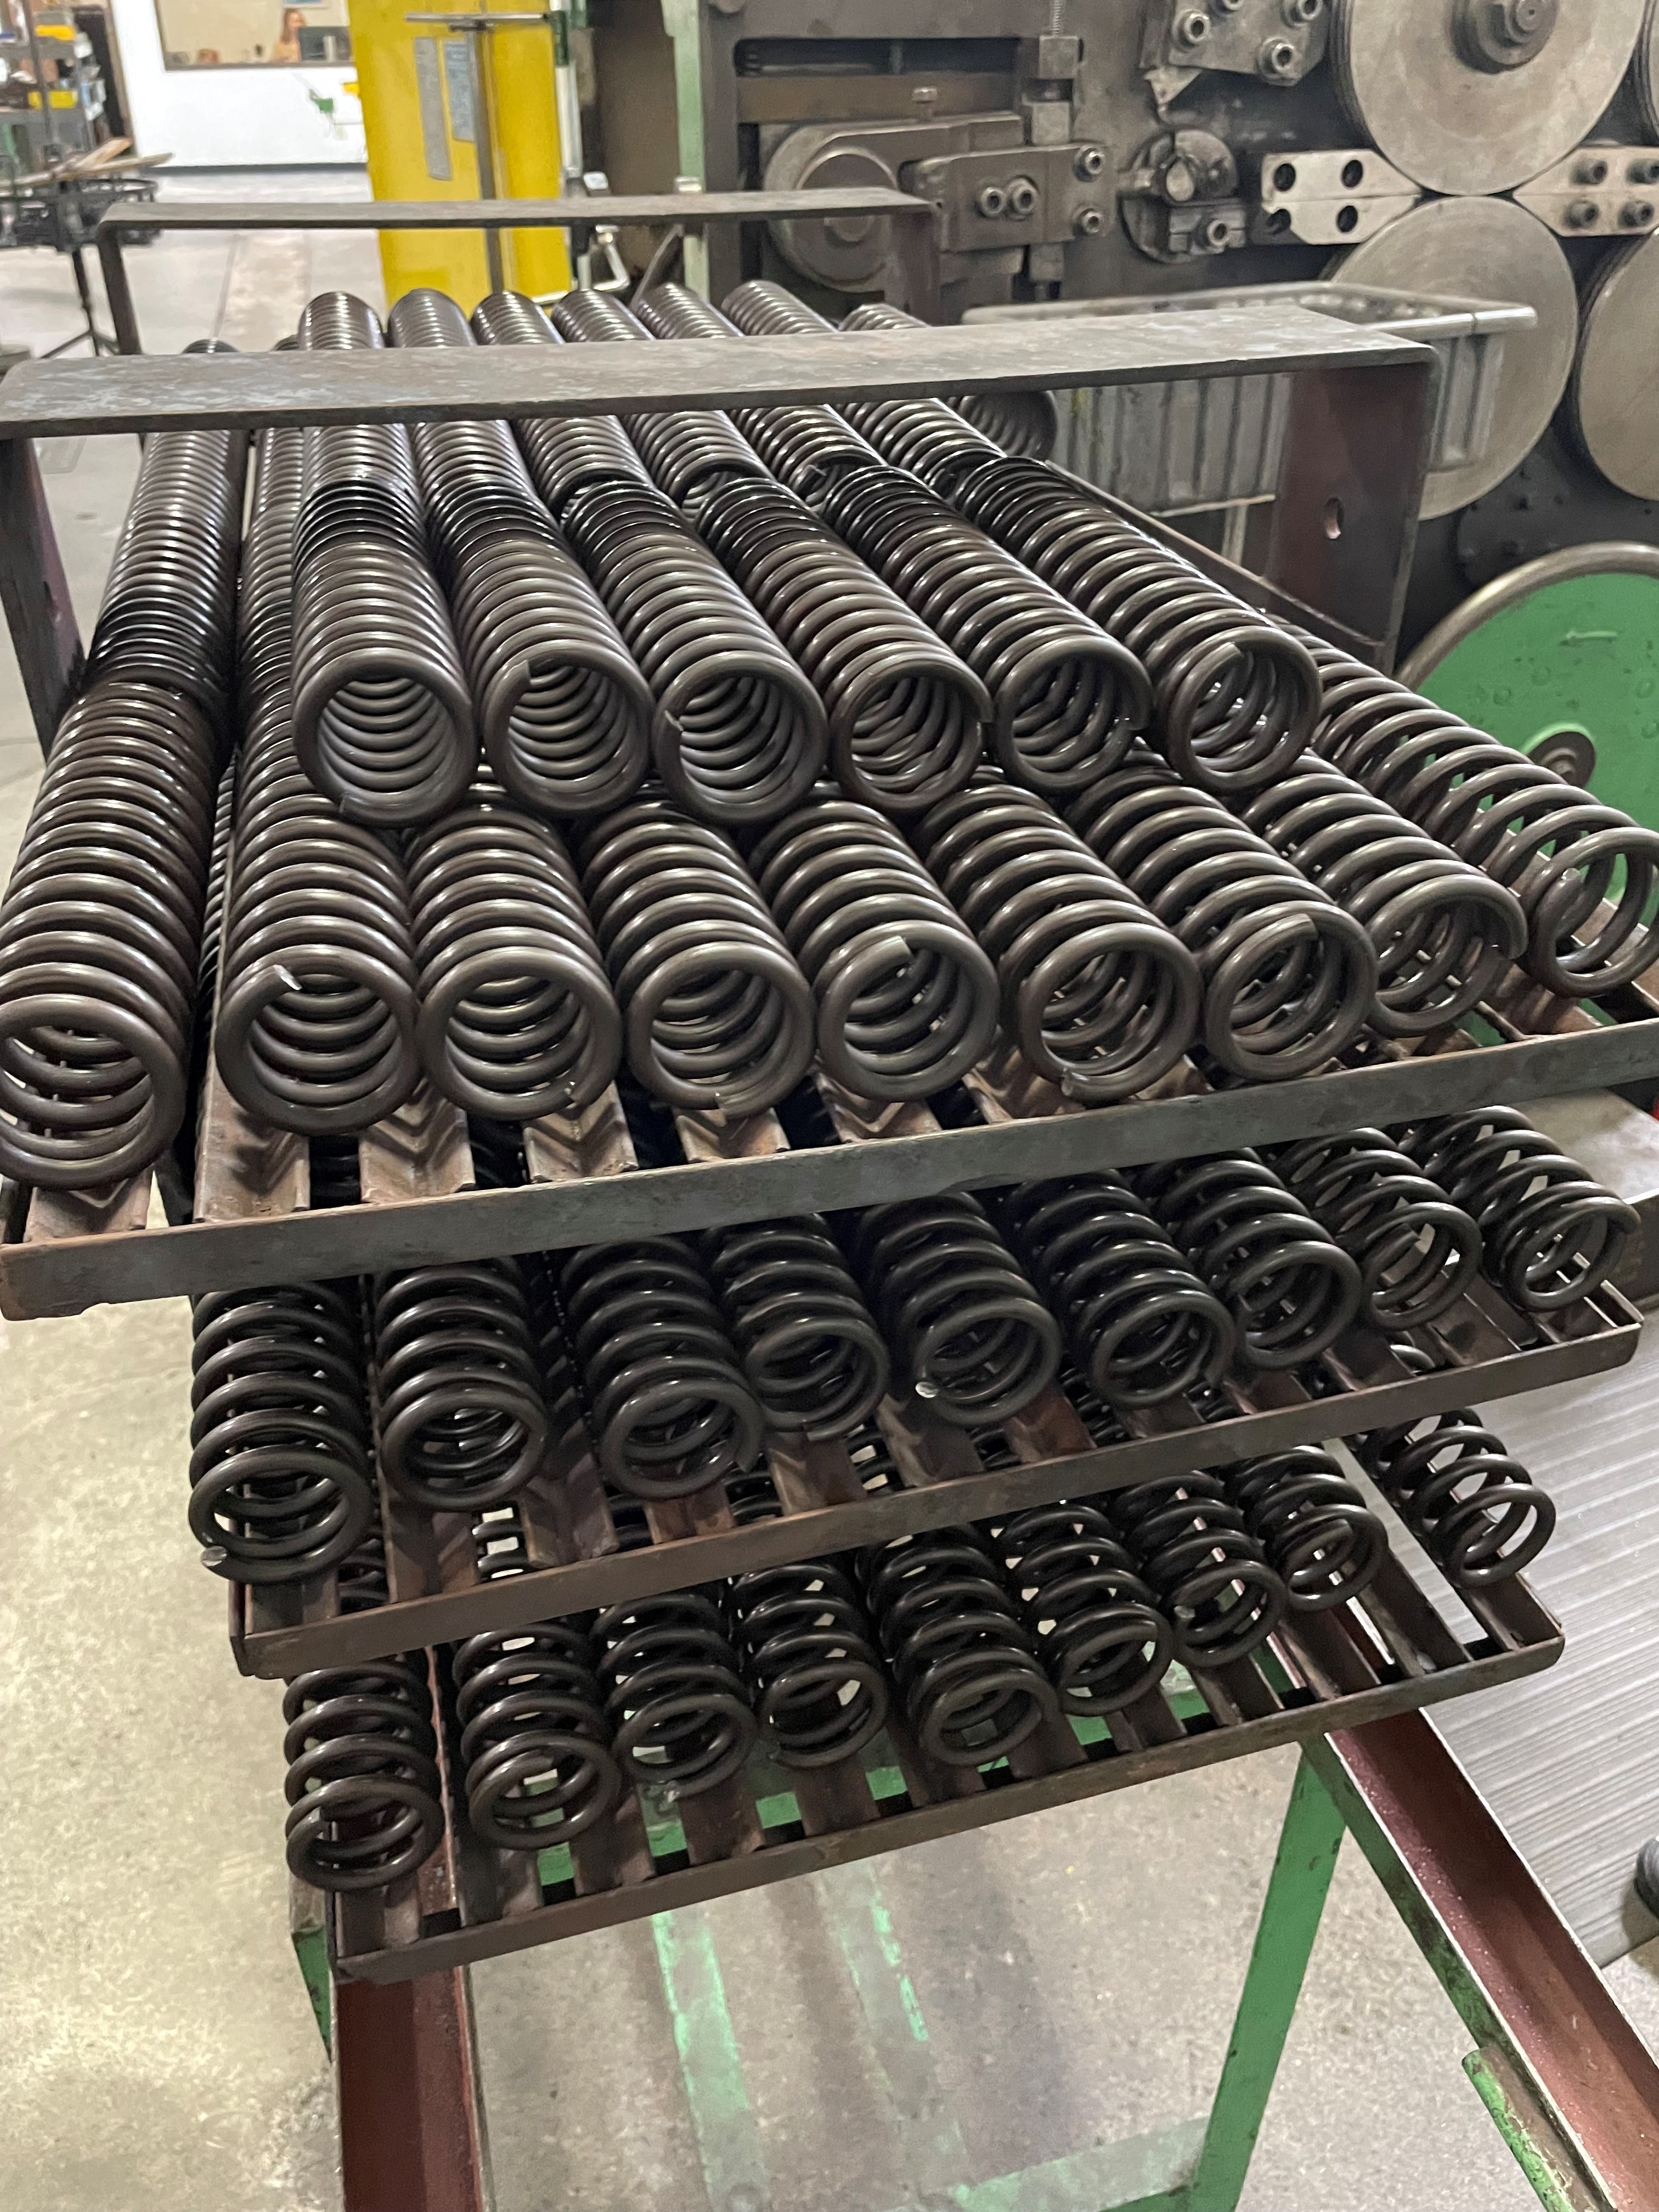 a stack of metal springs